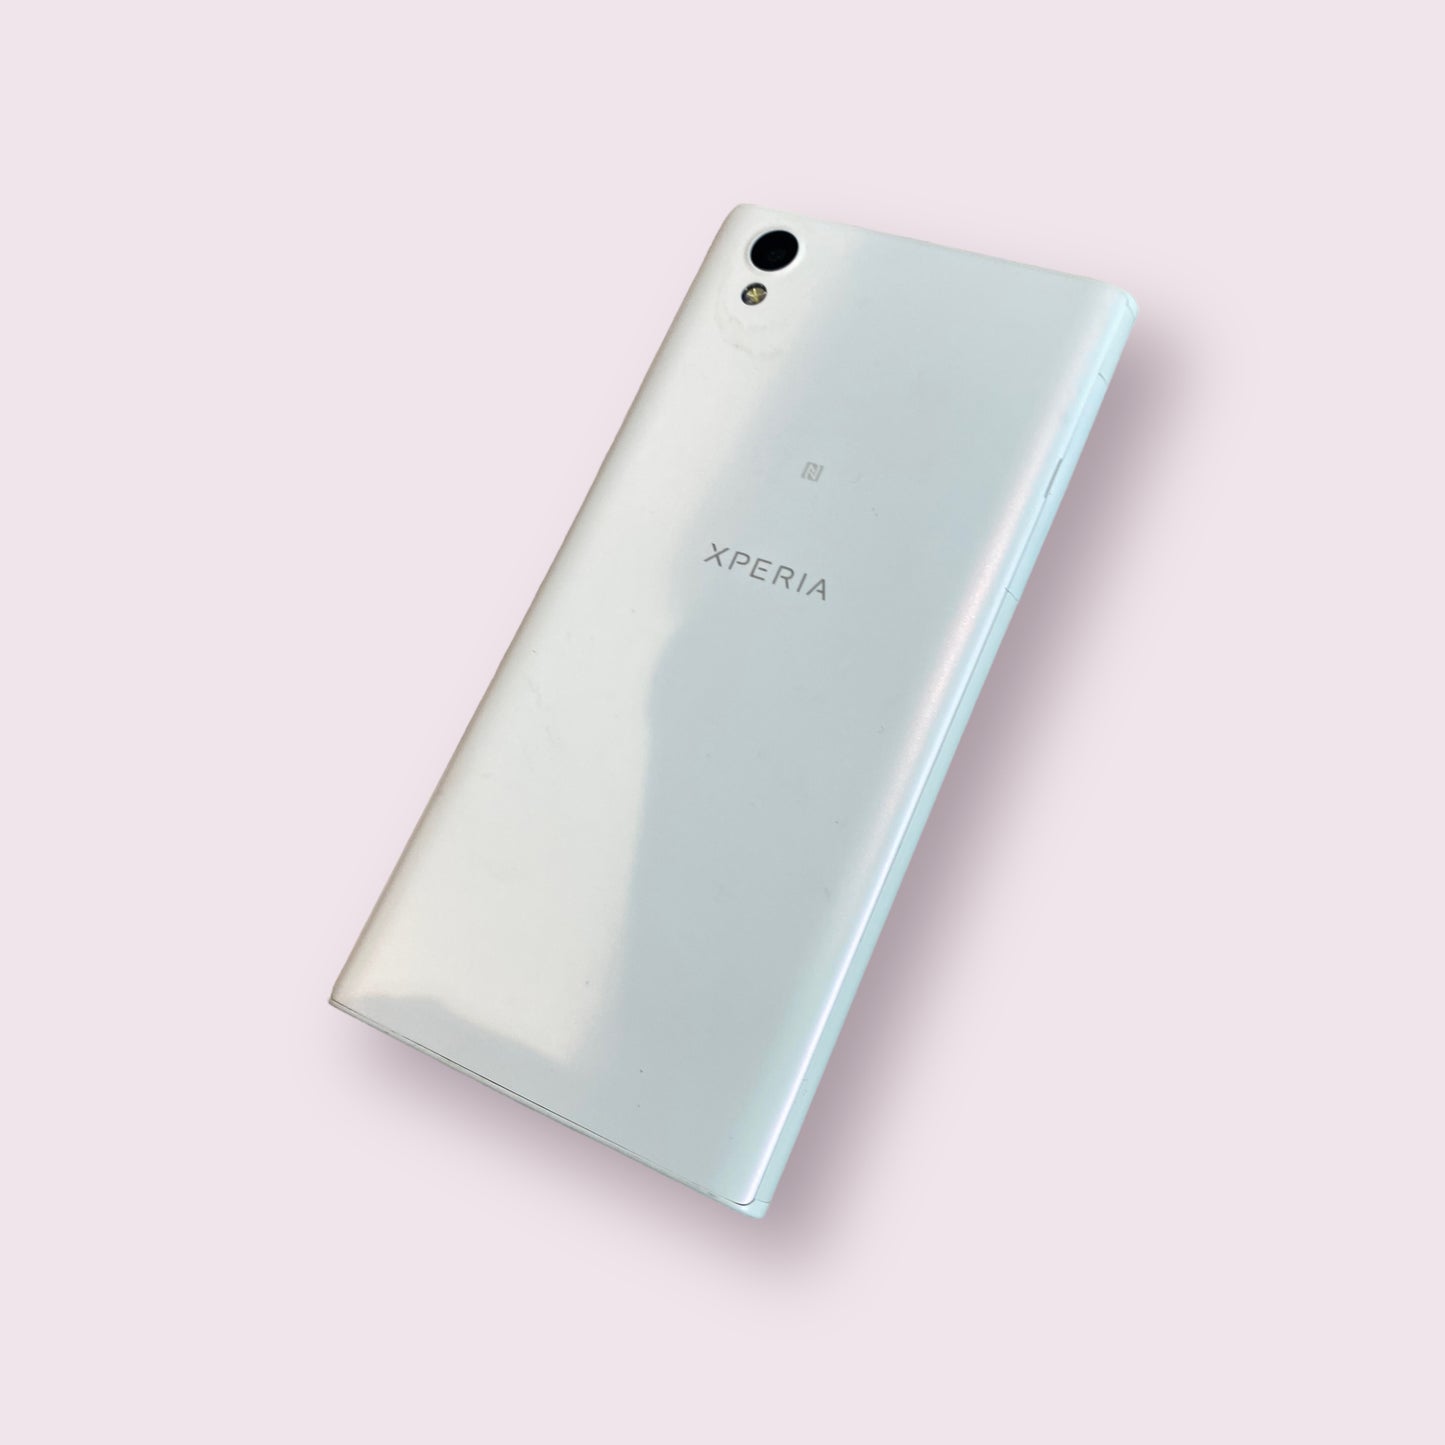 Sony Xperia L1 16GB G3311 Android Smartphone White - Unlocked - Grade B